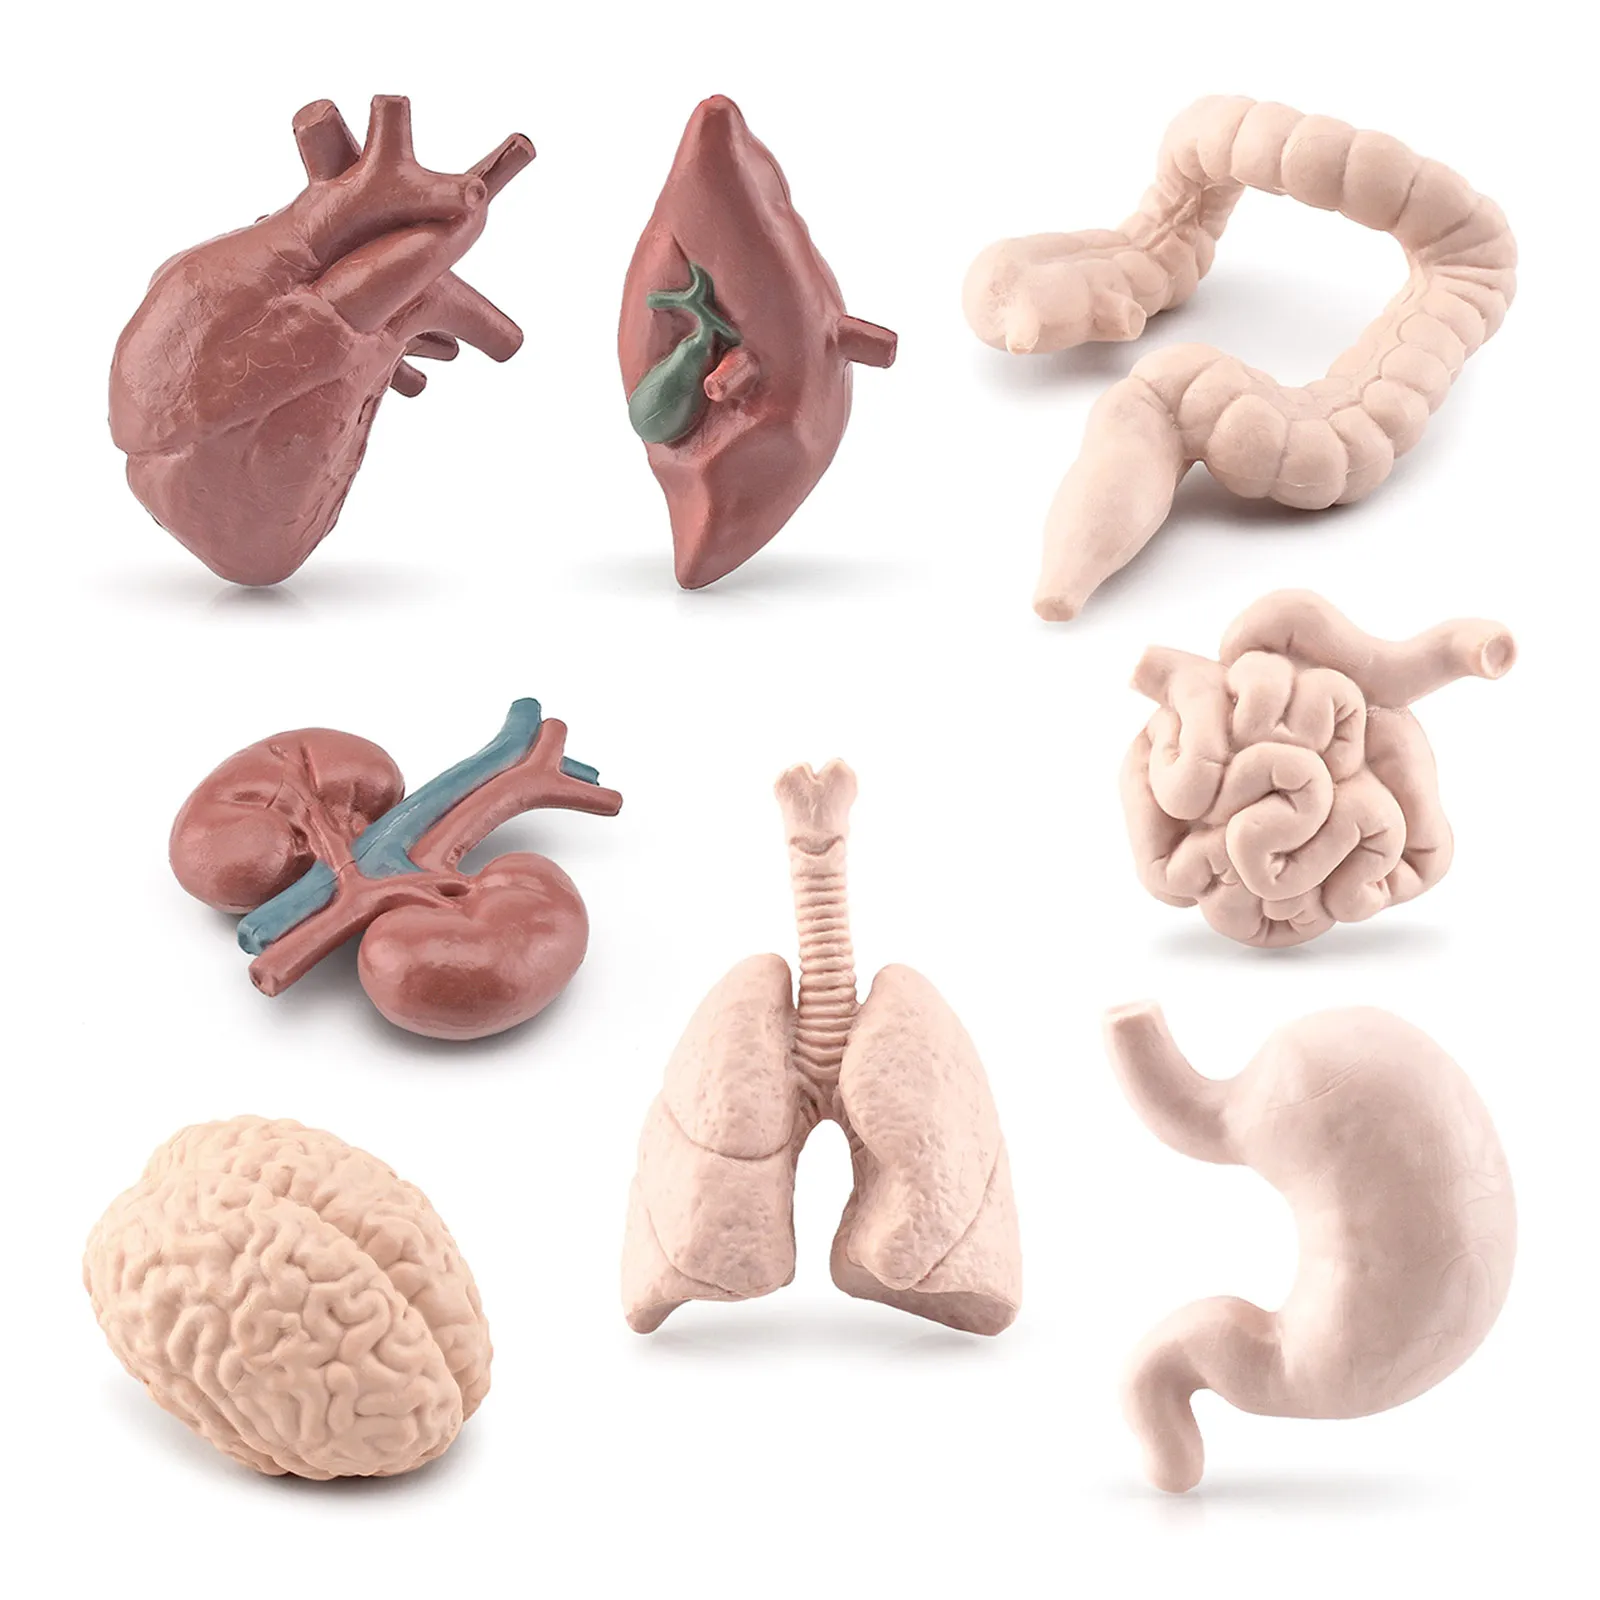 

Human Body Model Static Anatomy Organs 3D Human Body Organ Models Toy Children Brain Developmental Science Learning Aid